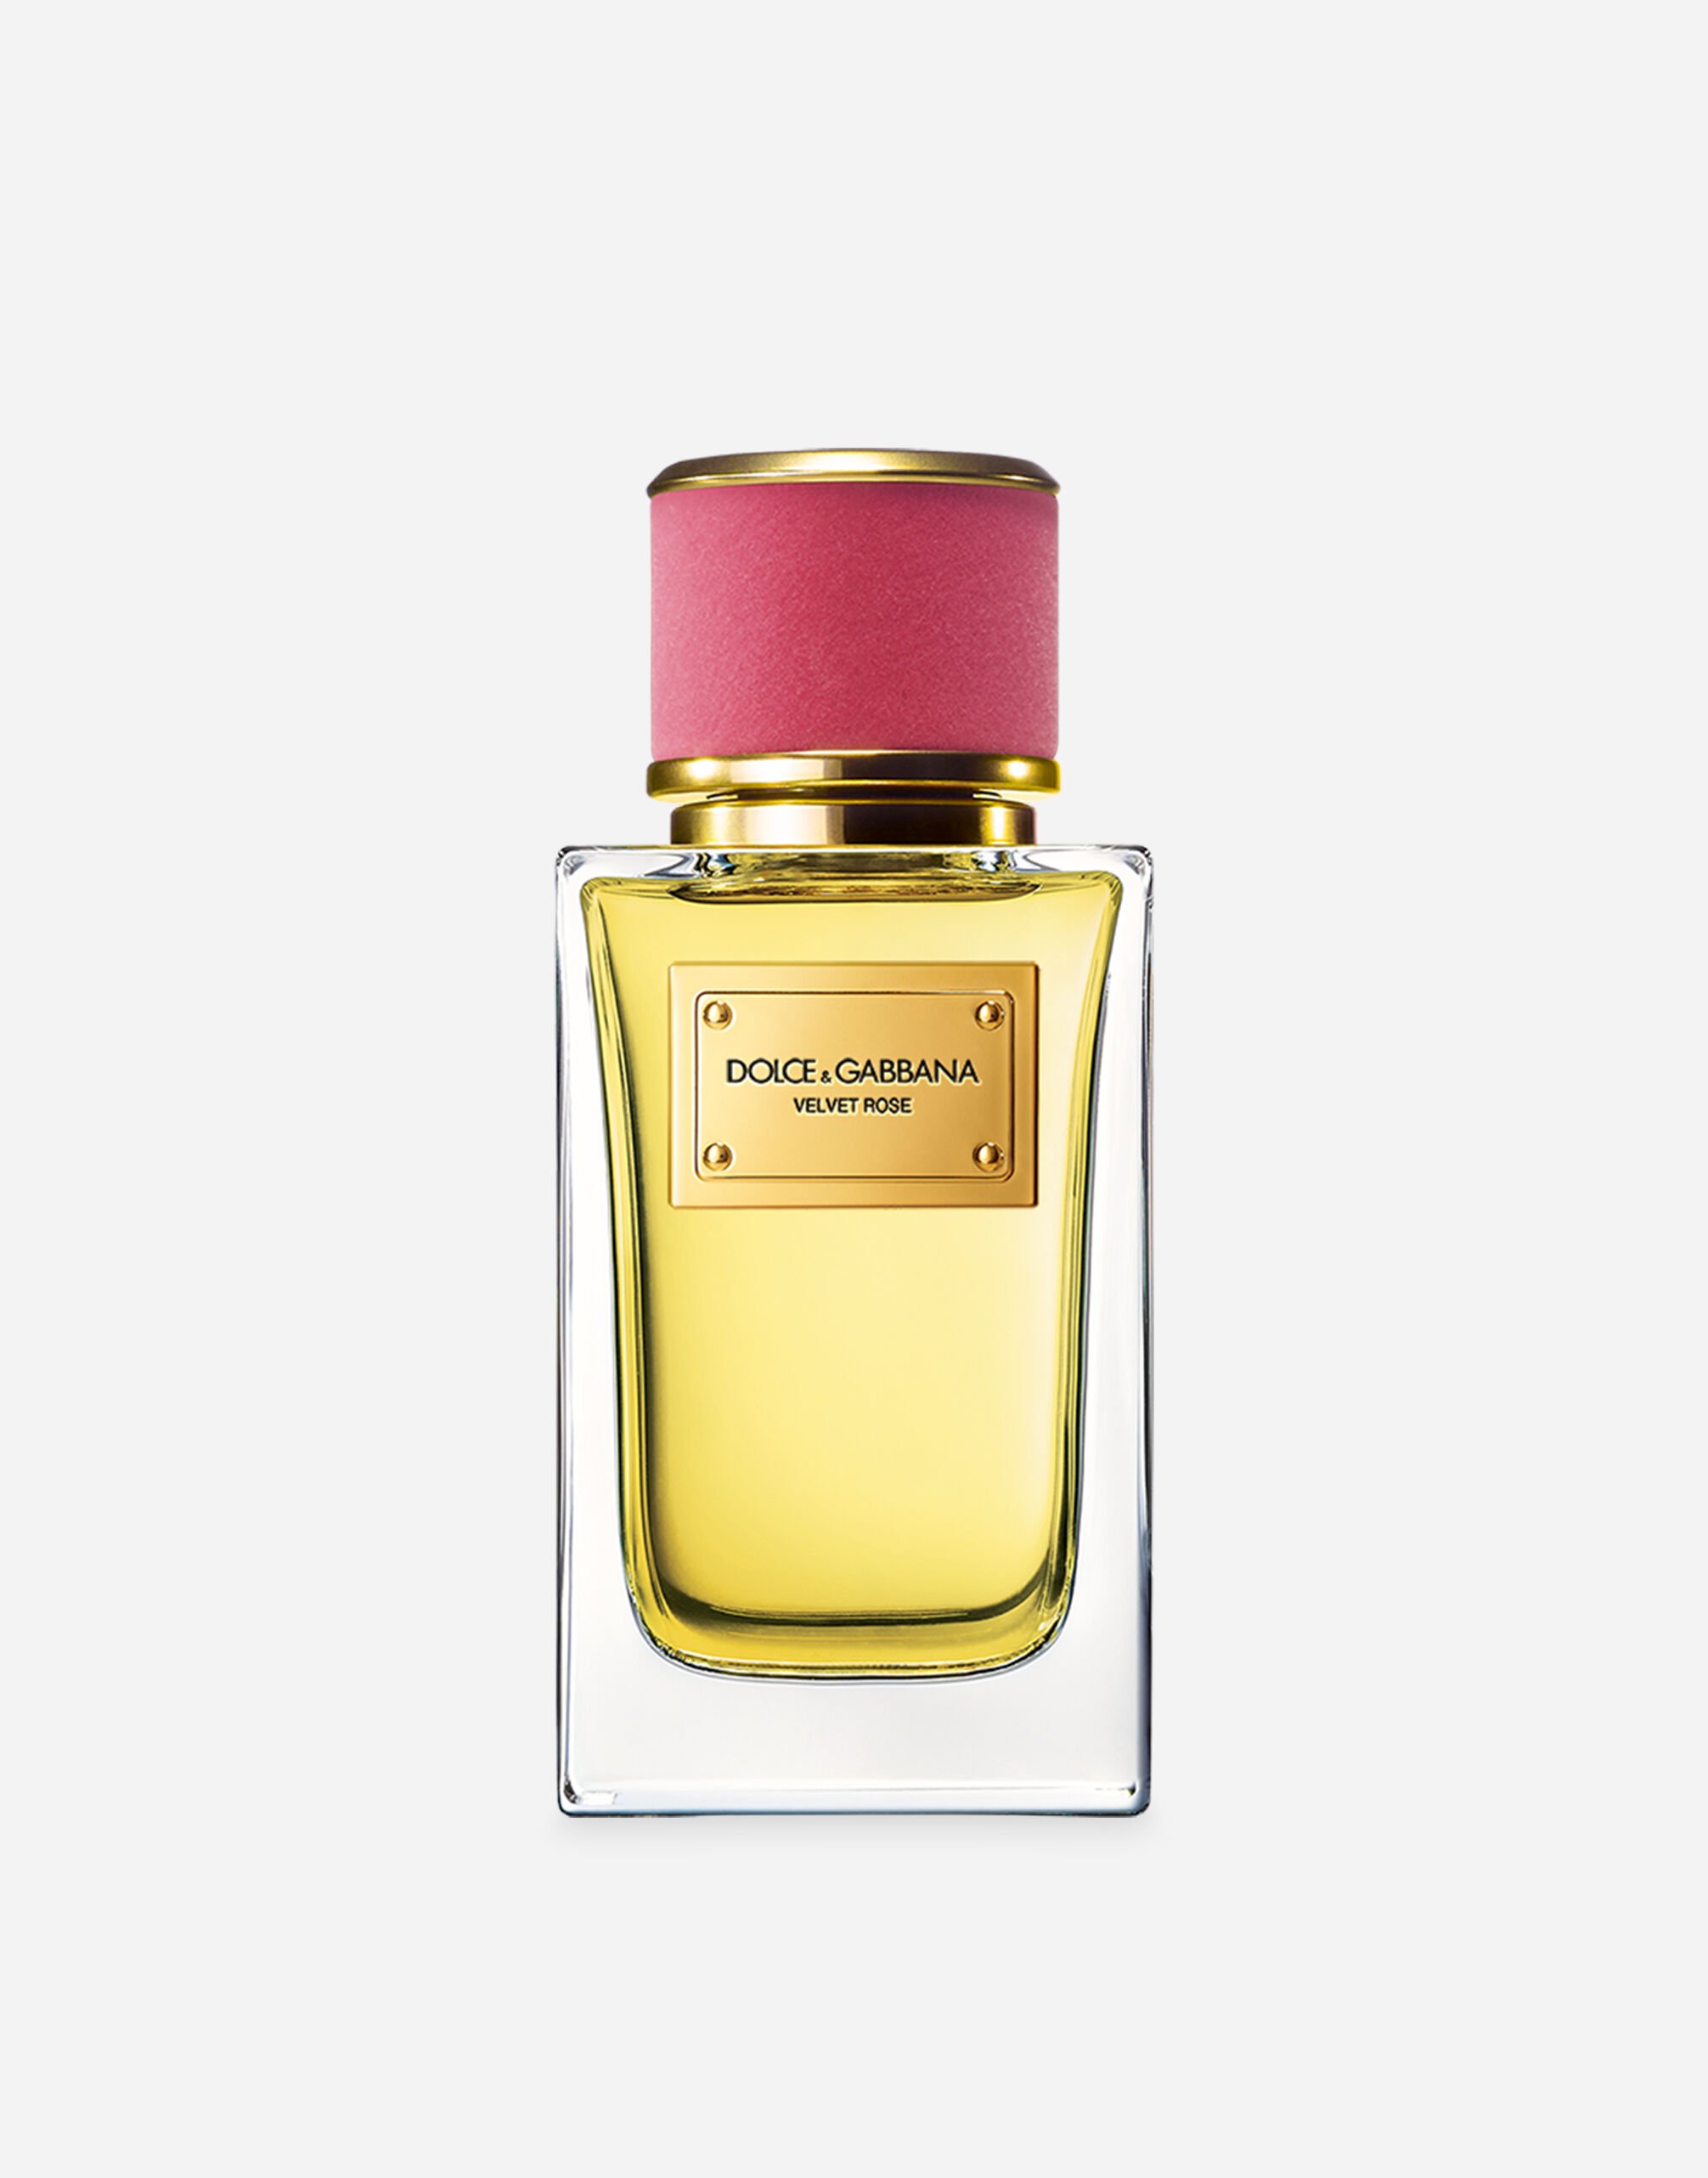 Dolce & Gabbana Velvet Rose Eau de Parfum - VP003BVP000